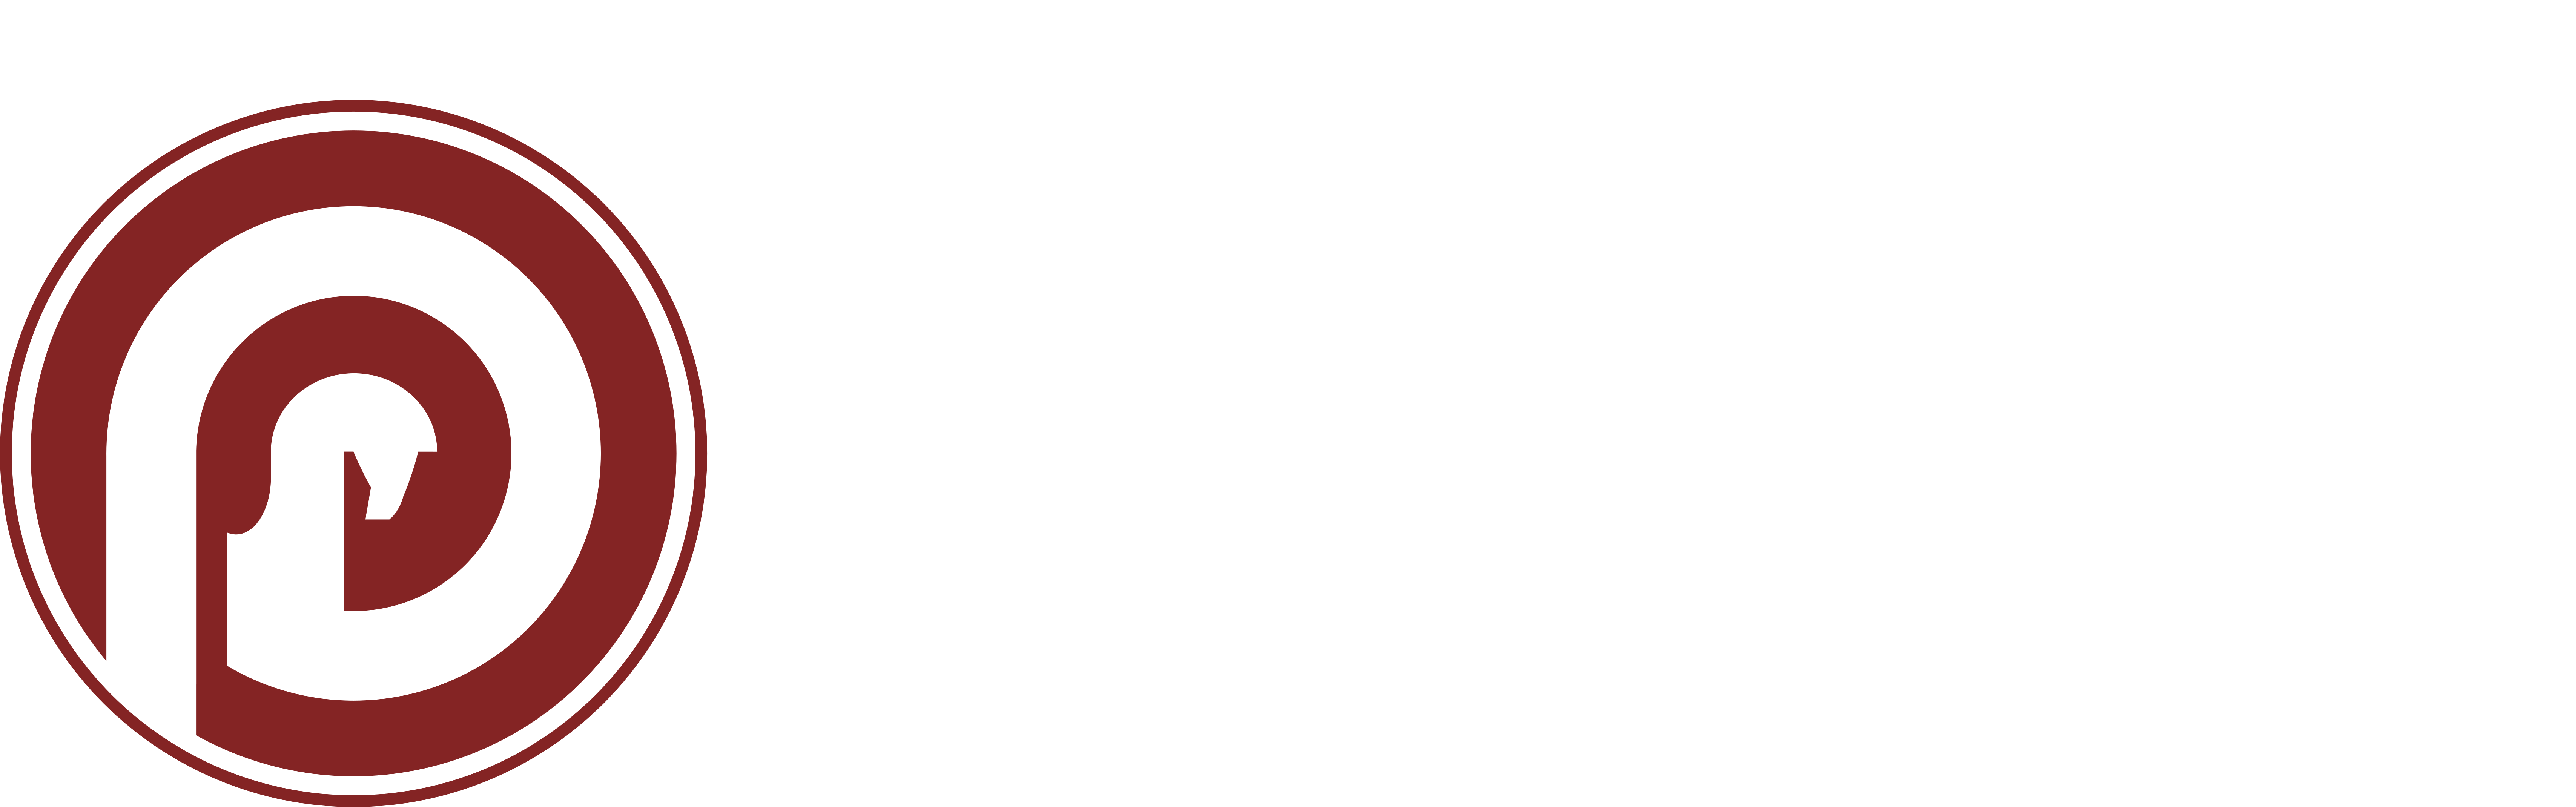 Proeza-Original